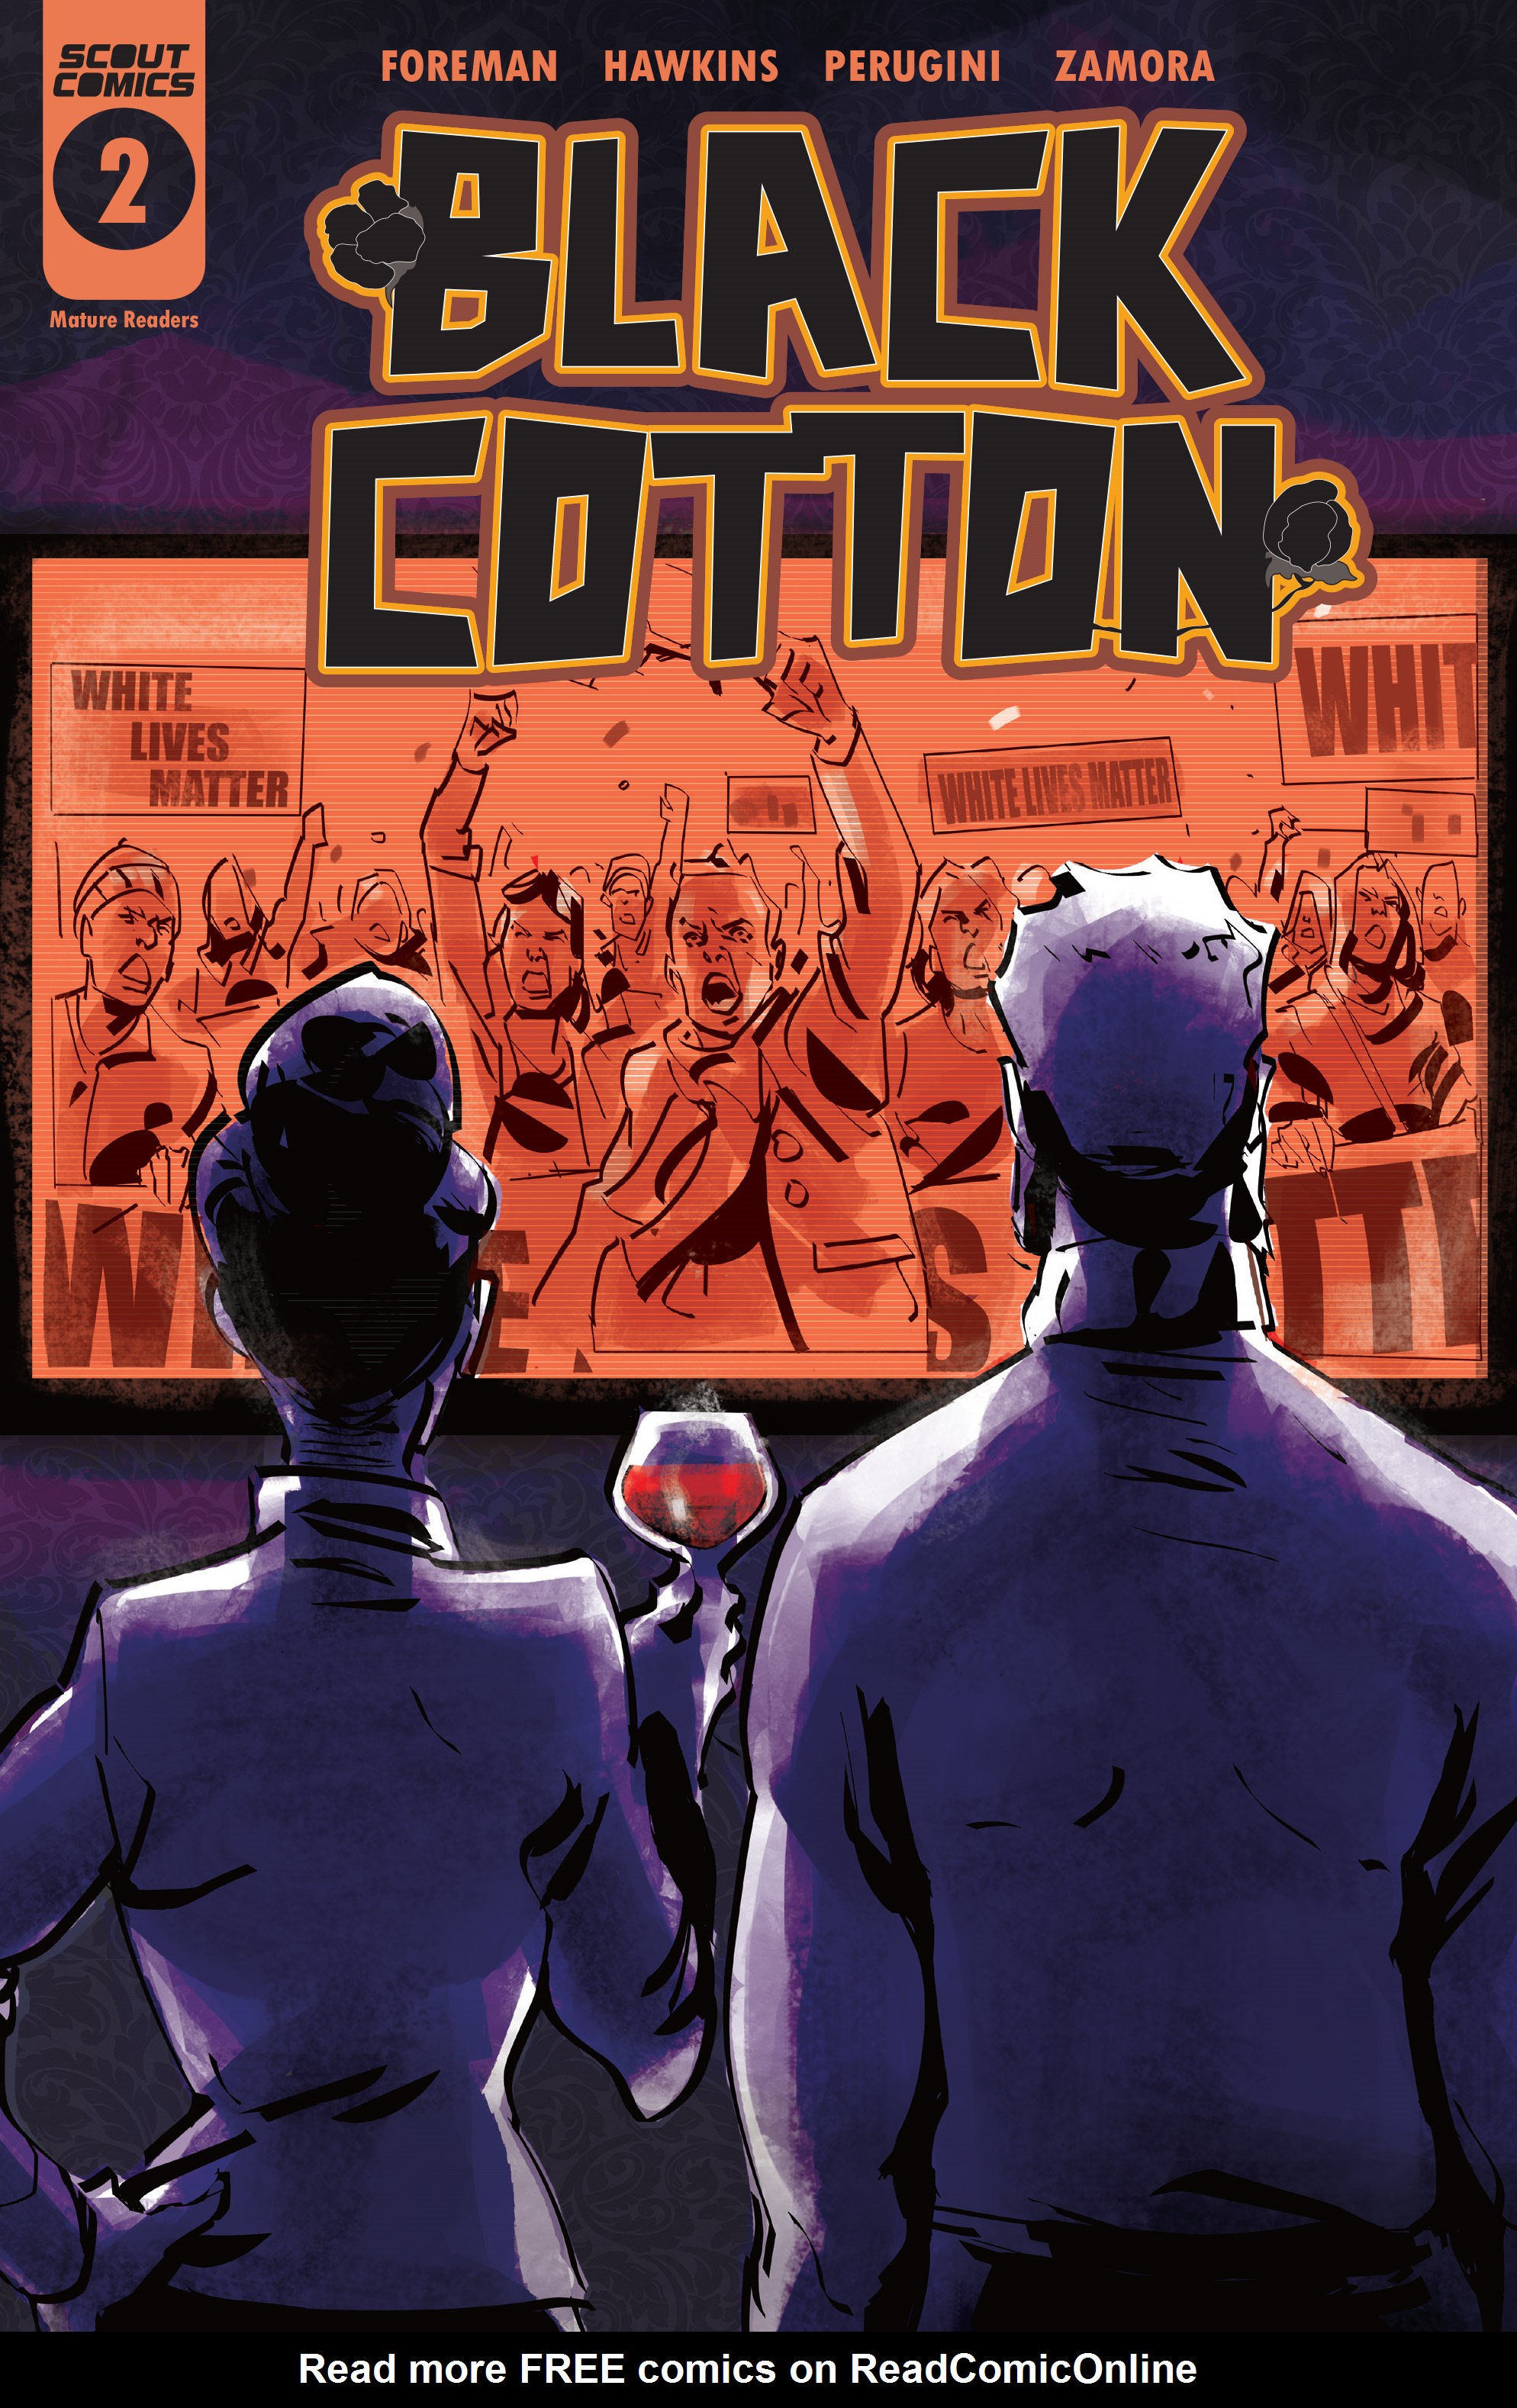 Read online Black Cotton comic -  Issue #2 - 1